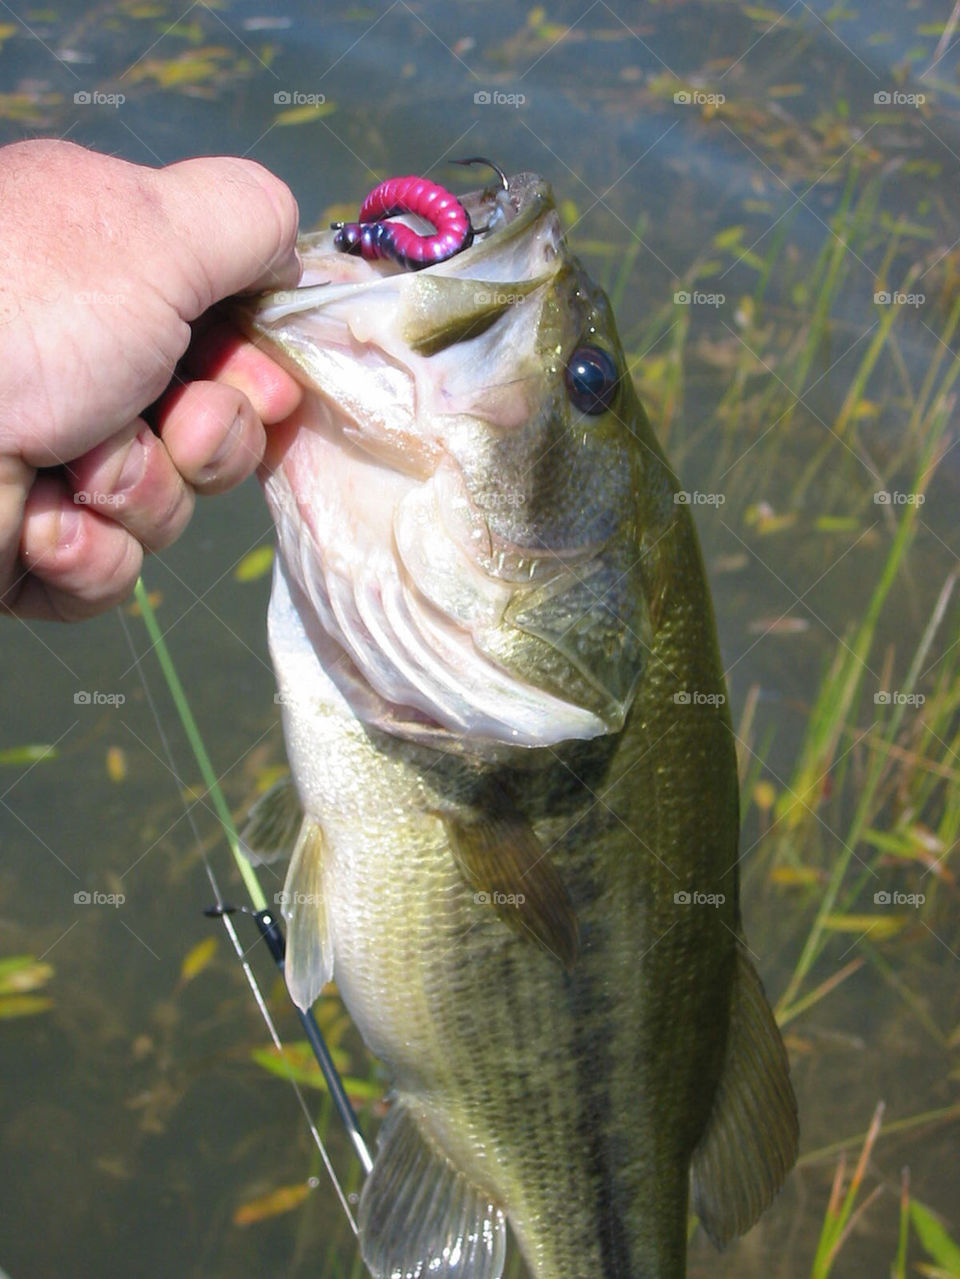 bass catch lure lip by tplips01